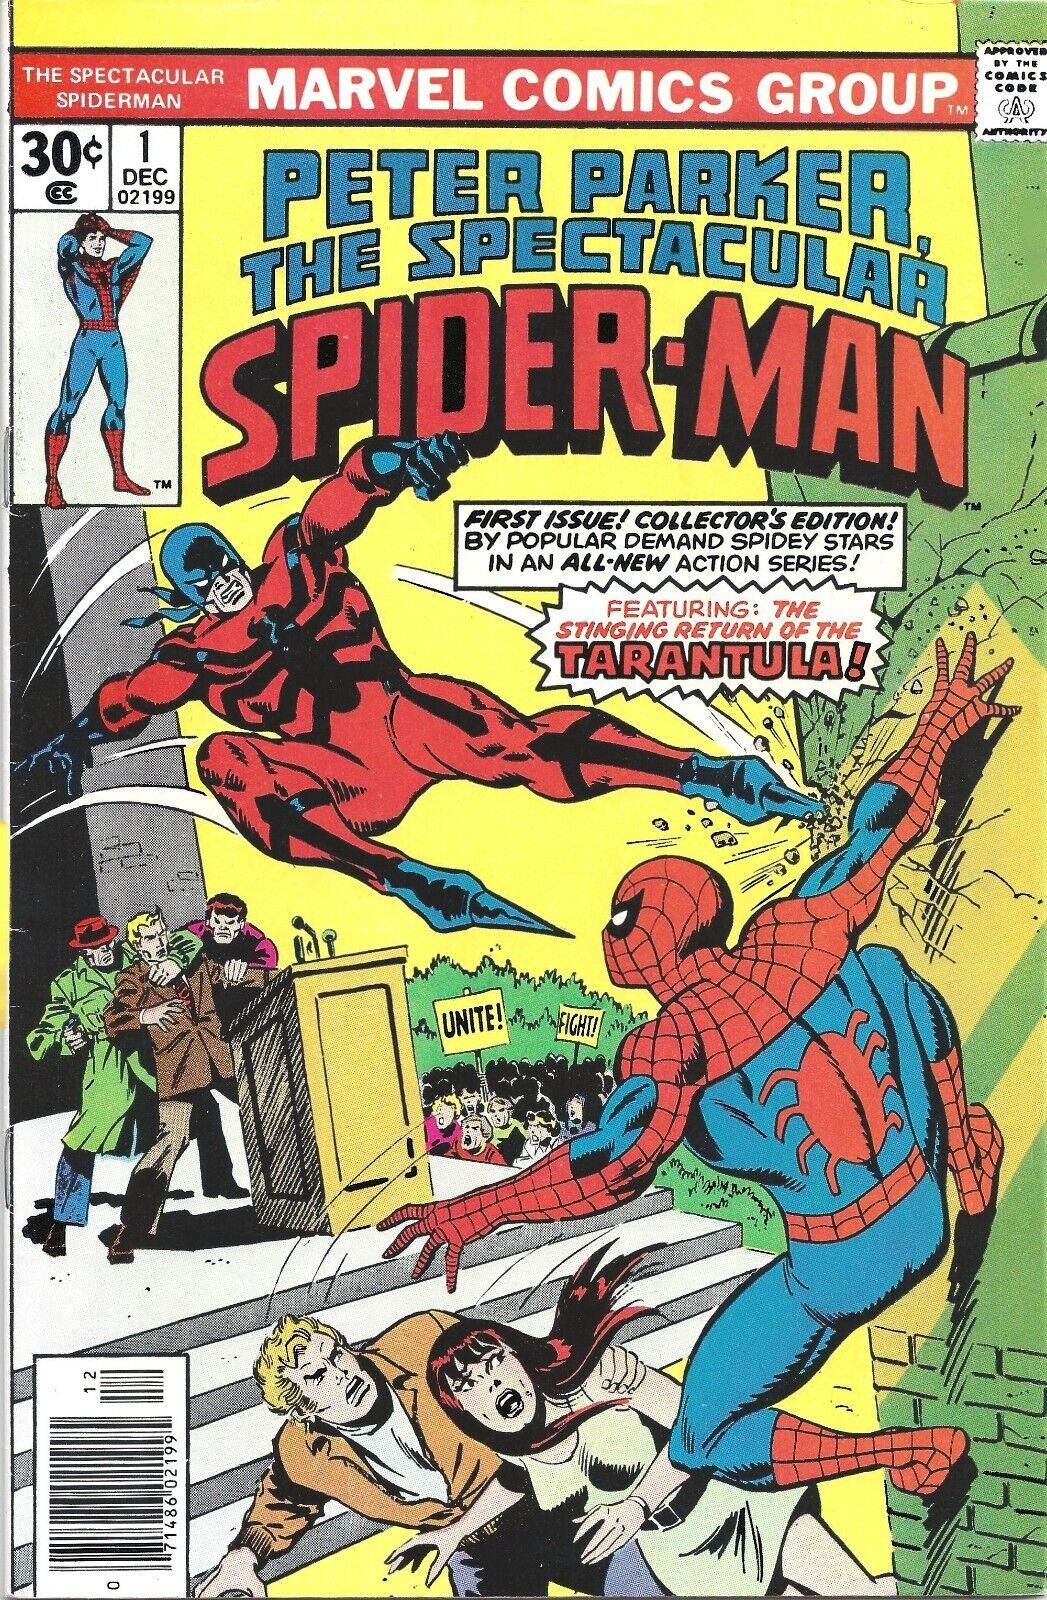 Marvel Comics THE SPECTACULAR SPIDER-MAN #1 December 1976